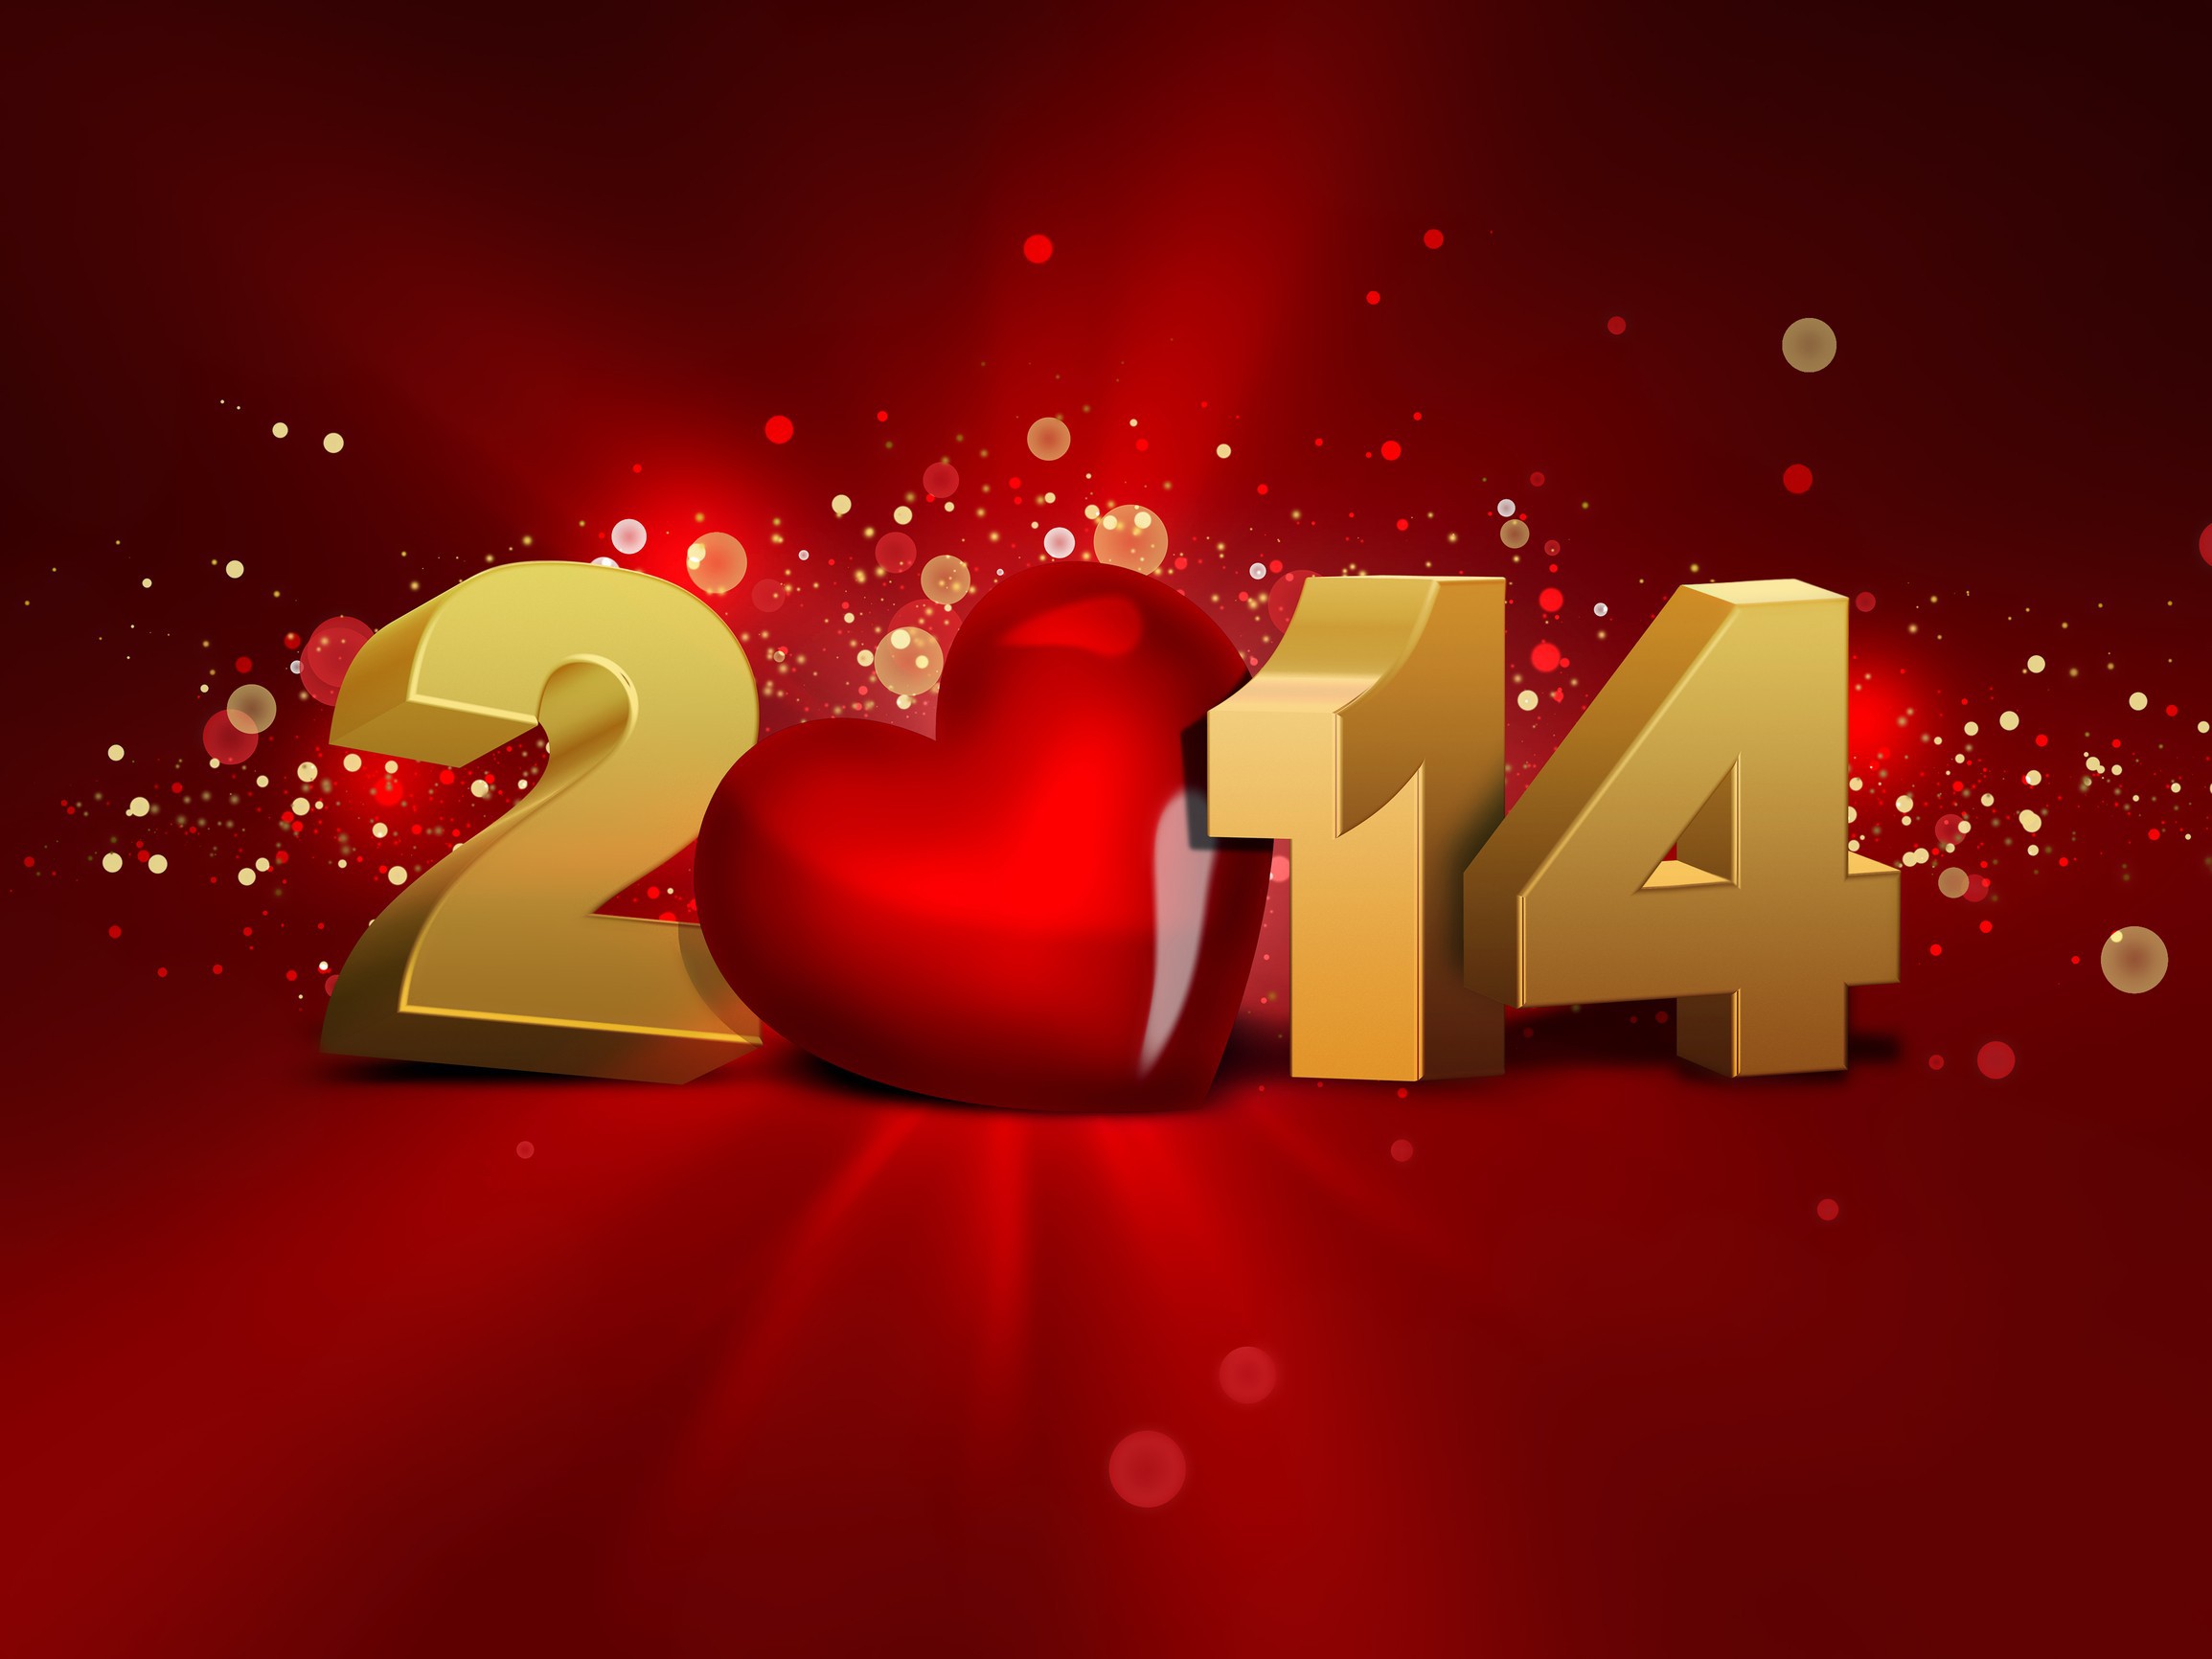 2014 год 2015 год тыс. 2014 Год картинка. Новый год 2014. Картинки новый год 2015. Картинки 2014.